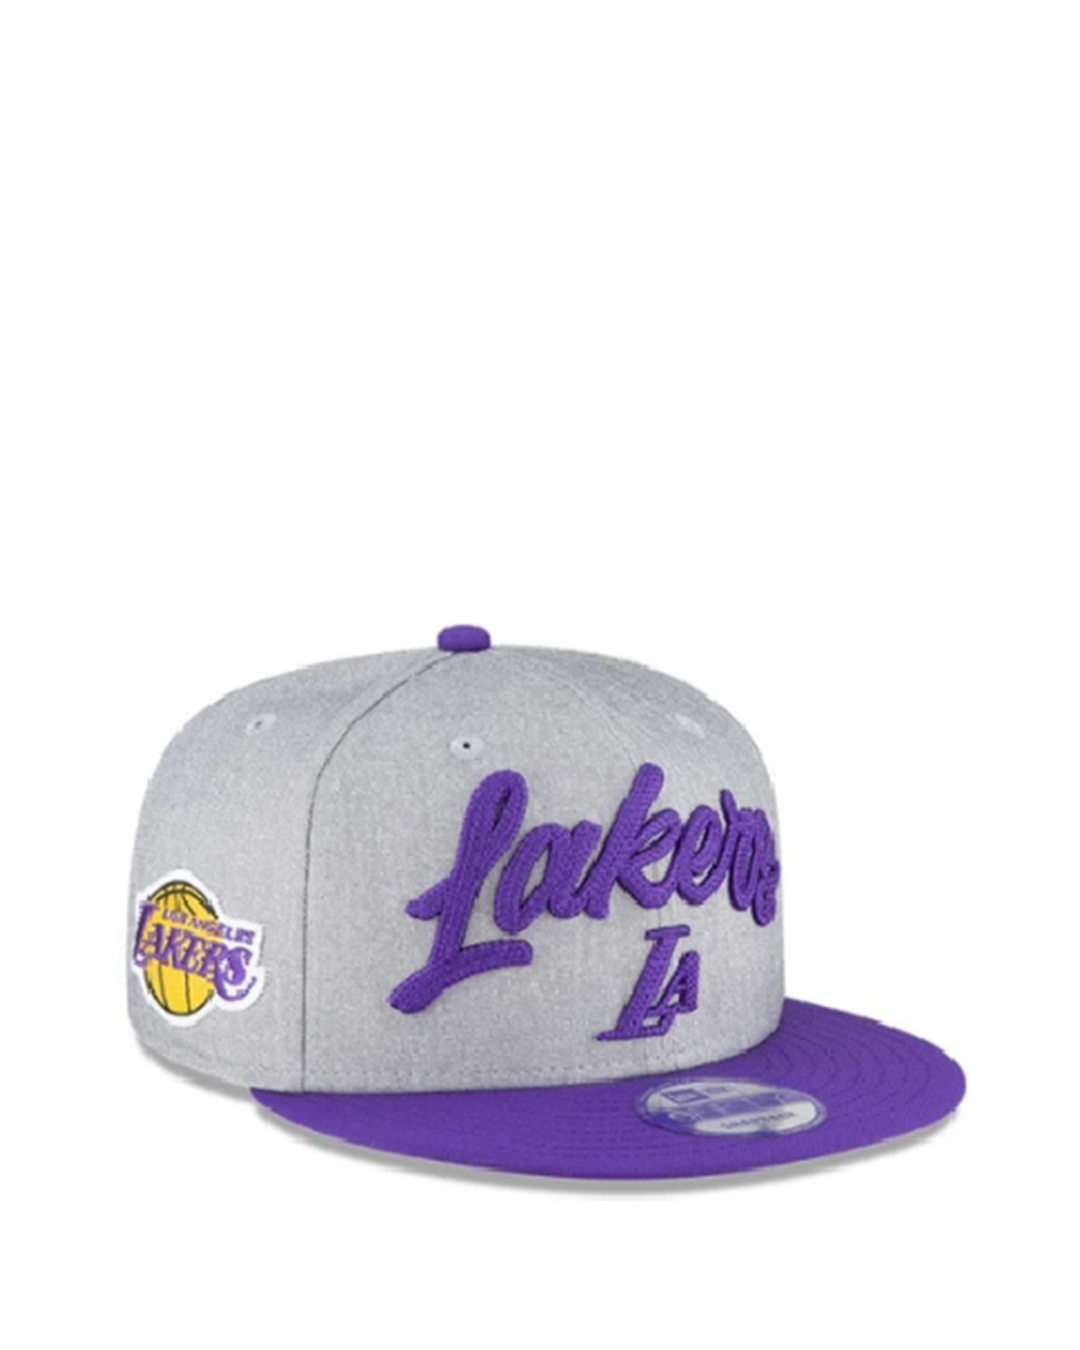 Los Angeles Lakers NBA Draft 9FIFTY White/Purple Snapback - New Era cap